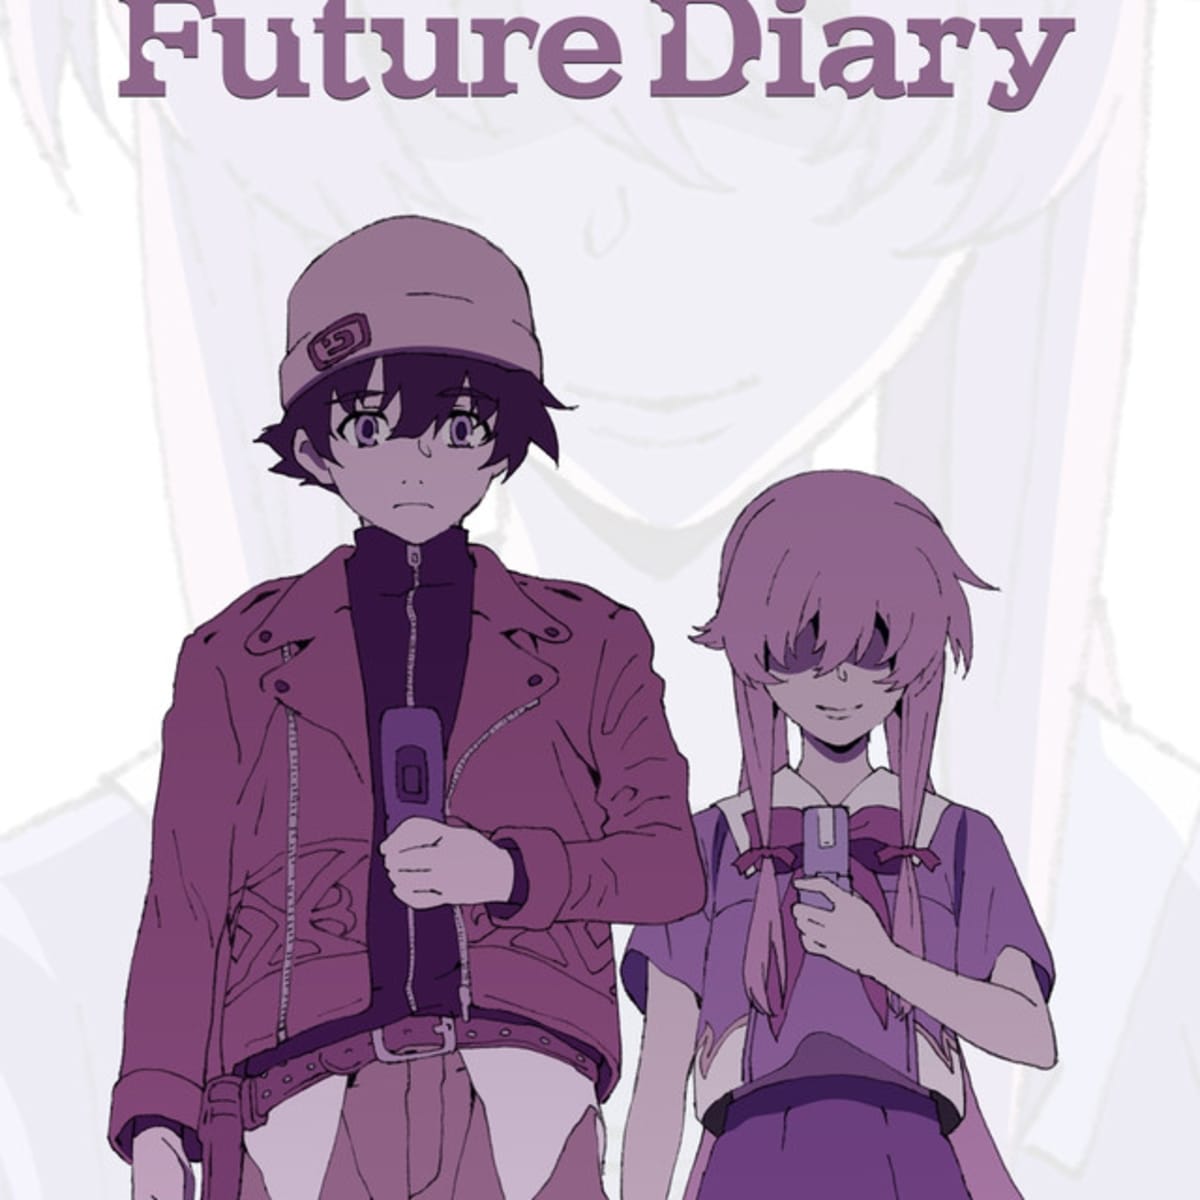 Mirai Nikki/#1006167  Mirai nikki, Mirai nikki future diary, Future diary